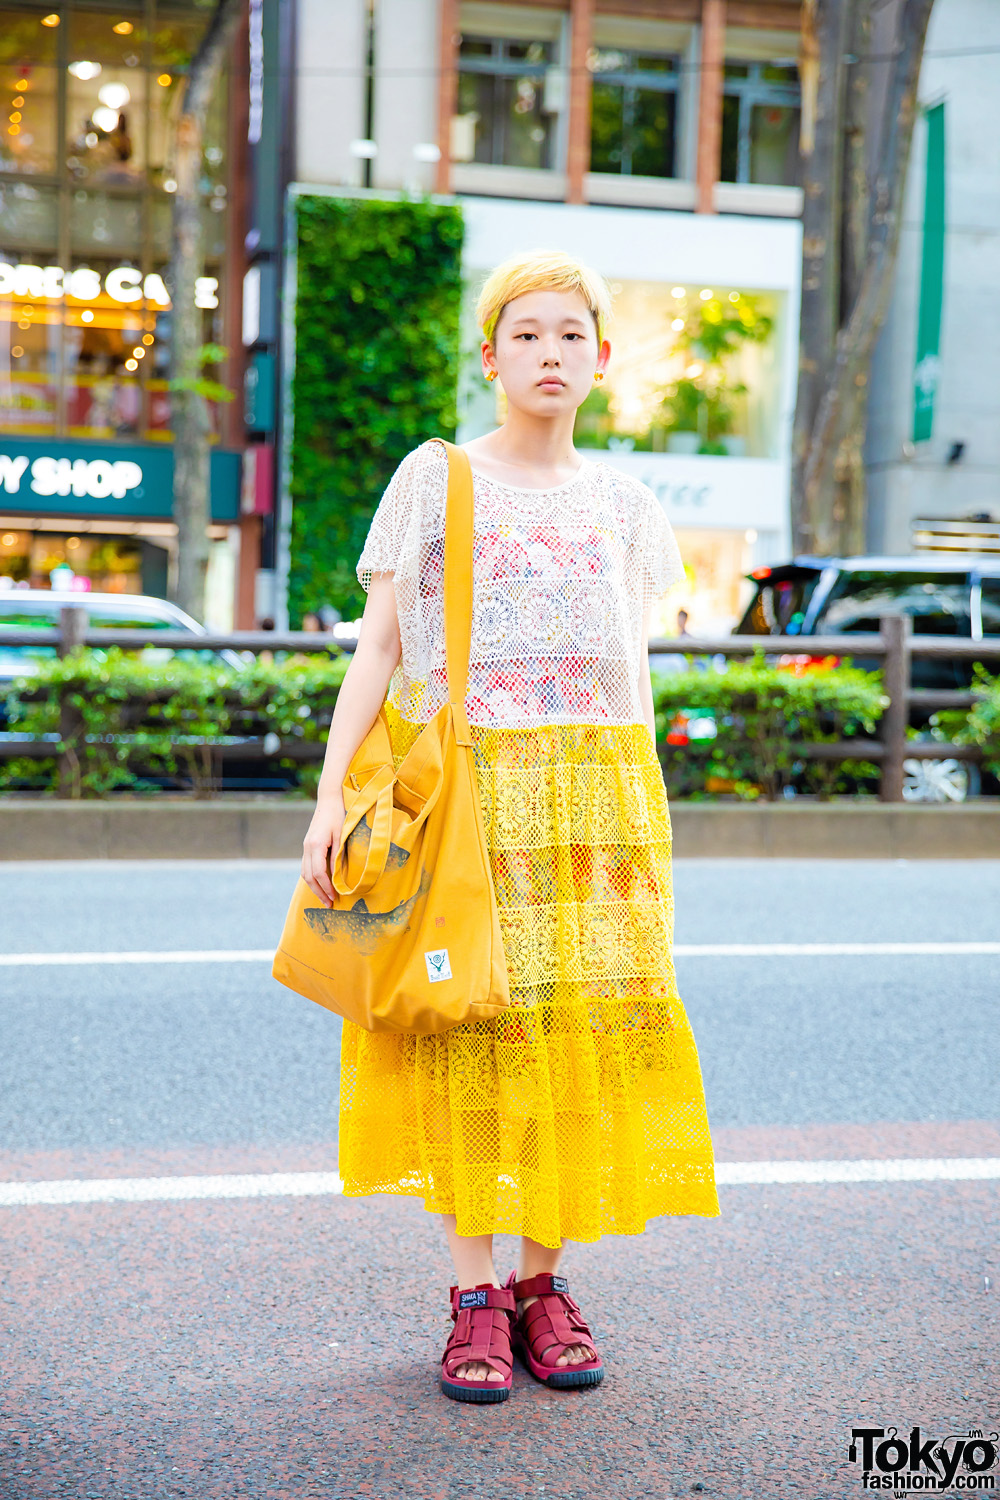 zara yellow knit dress